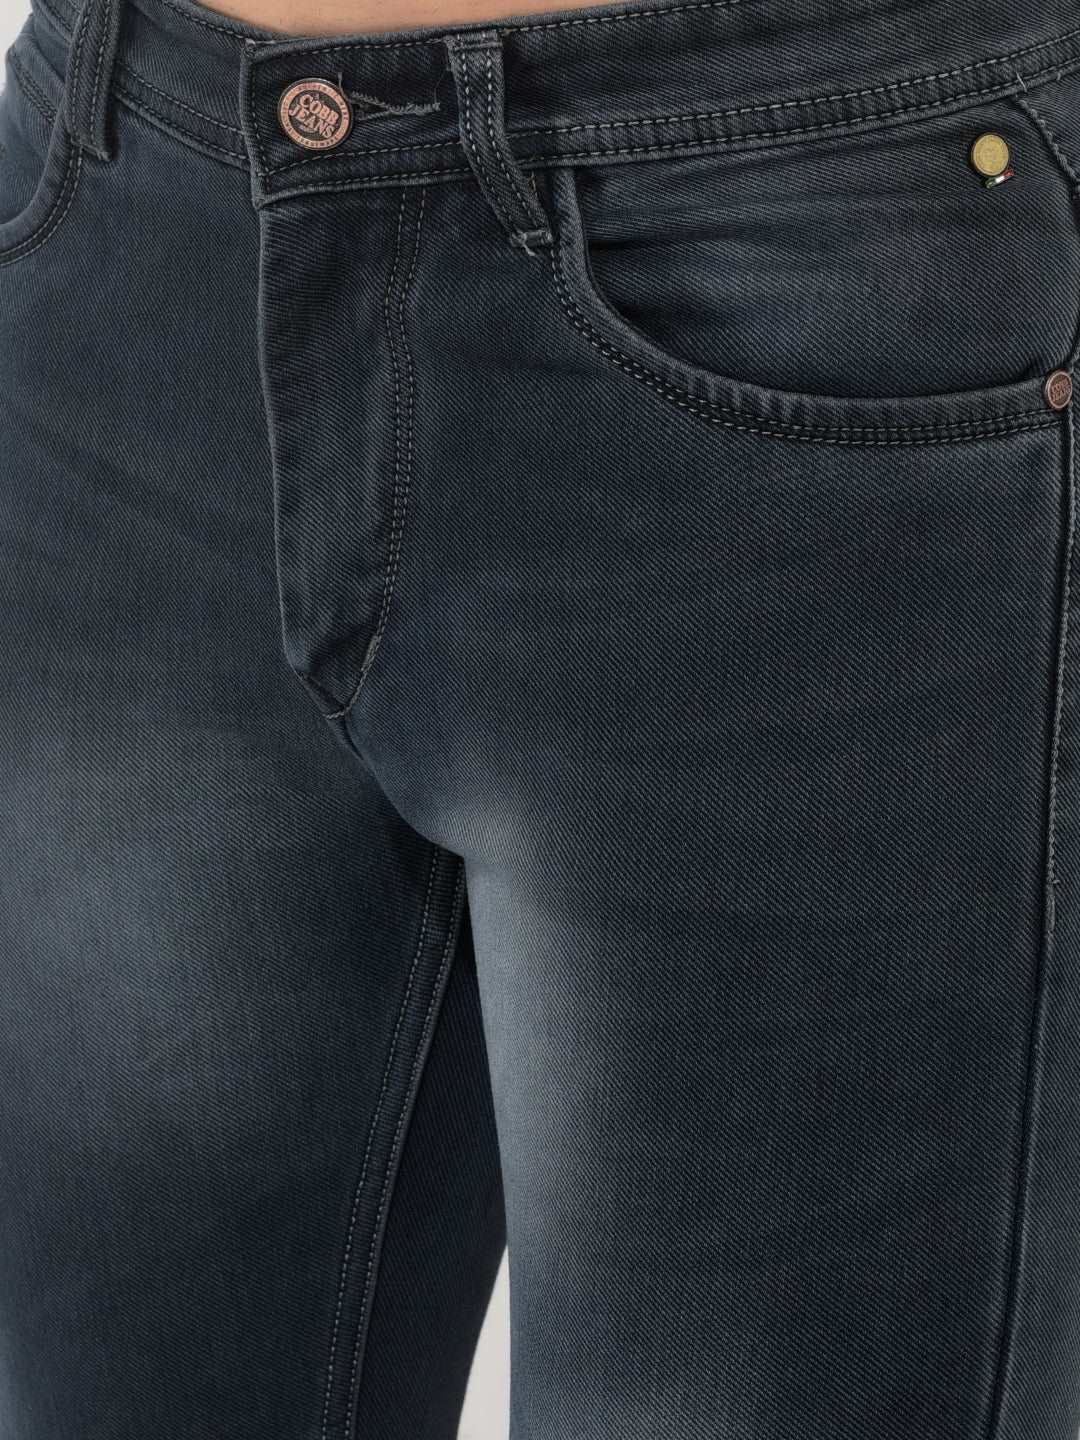 Cobb Dark Navy Narrow Fit Premium Jeans